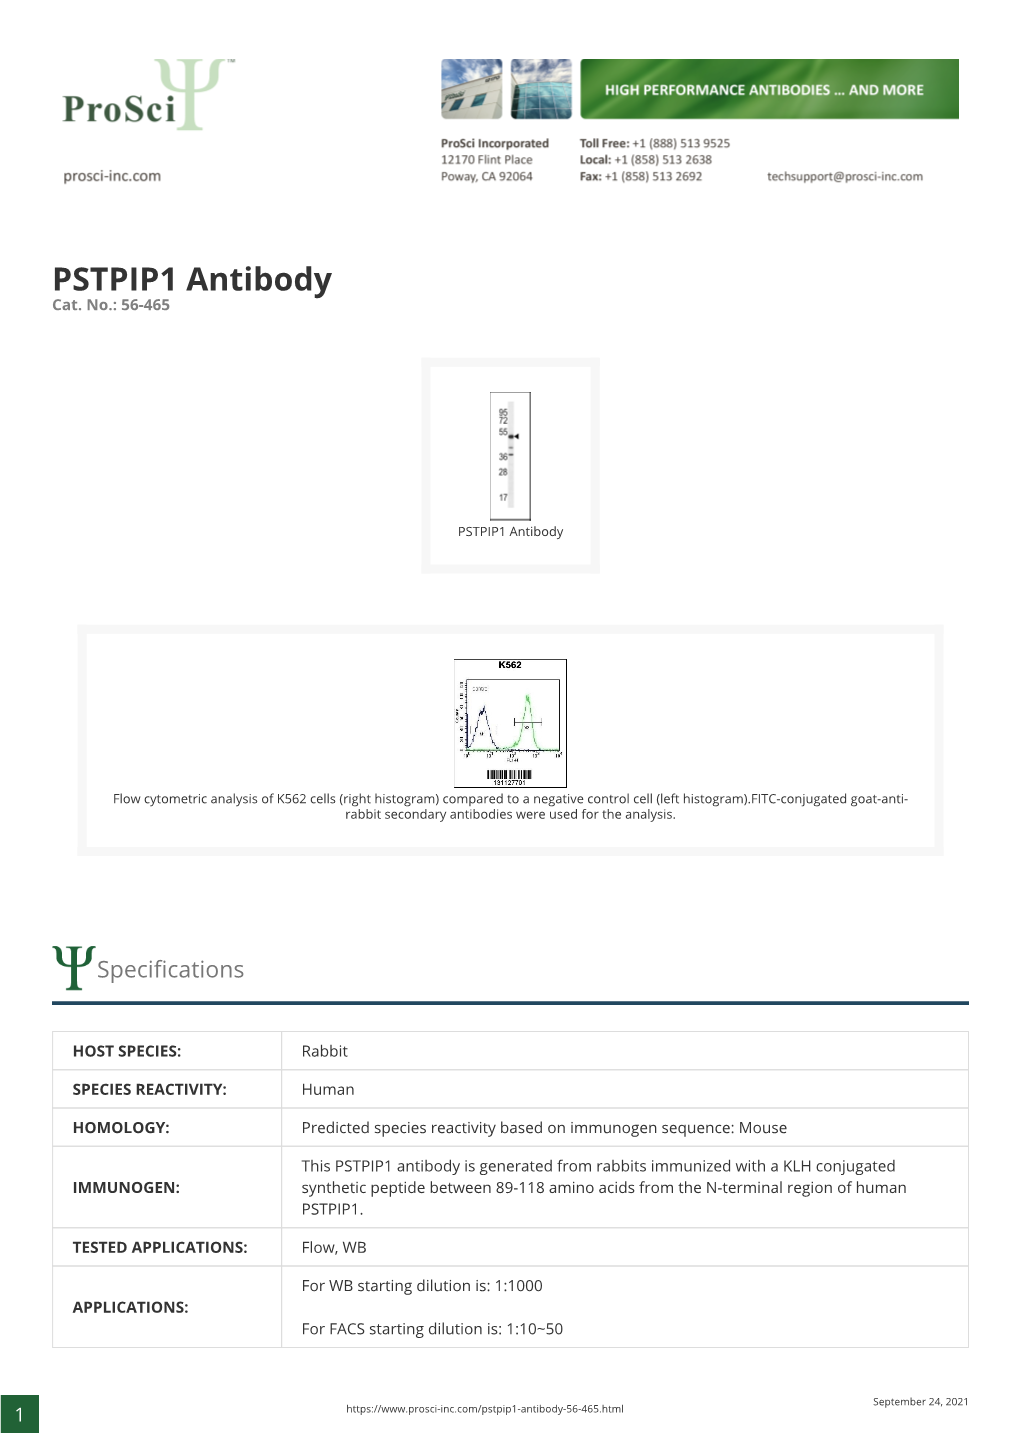 PSTPIP1 Antibody Cat